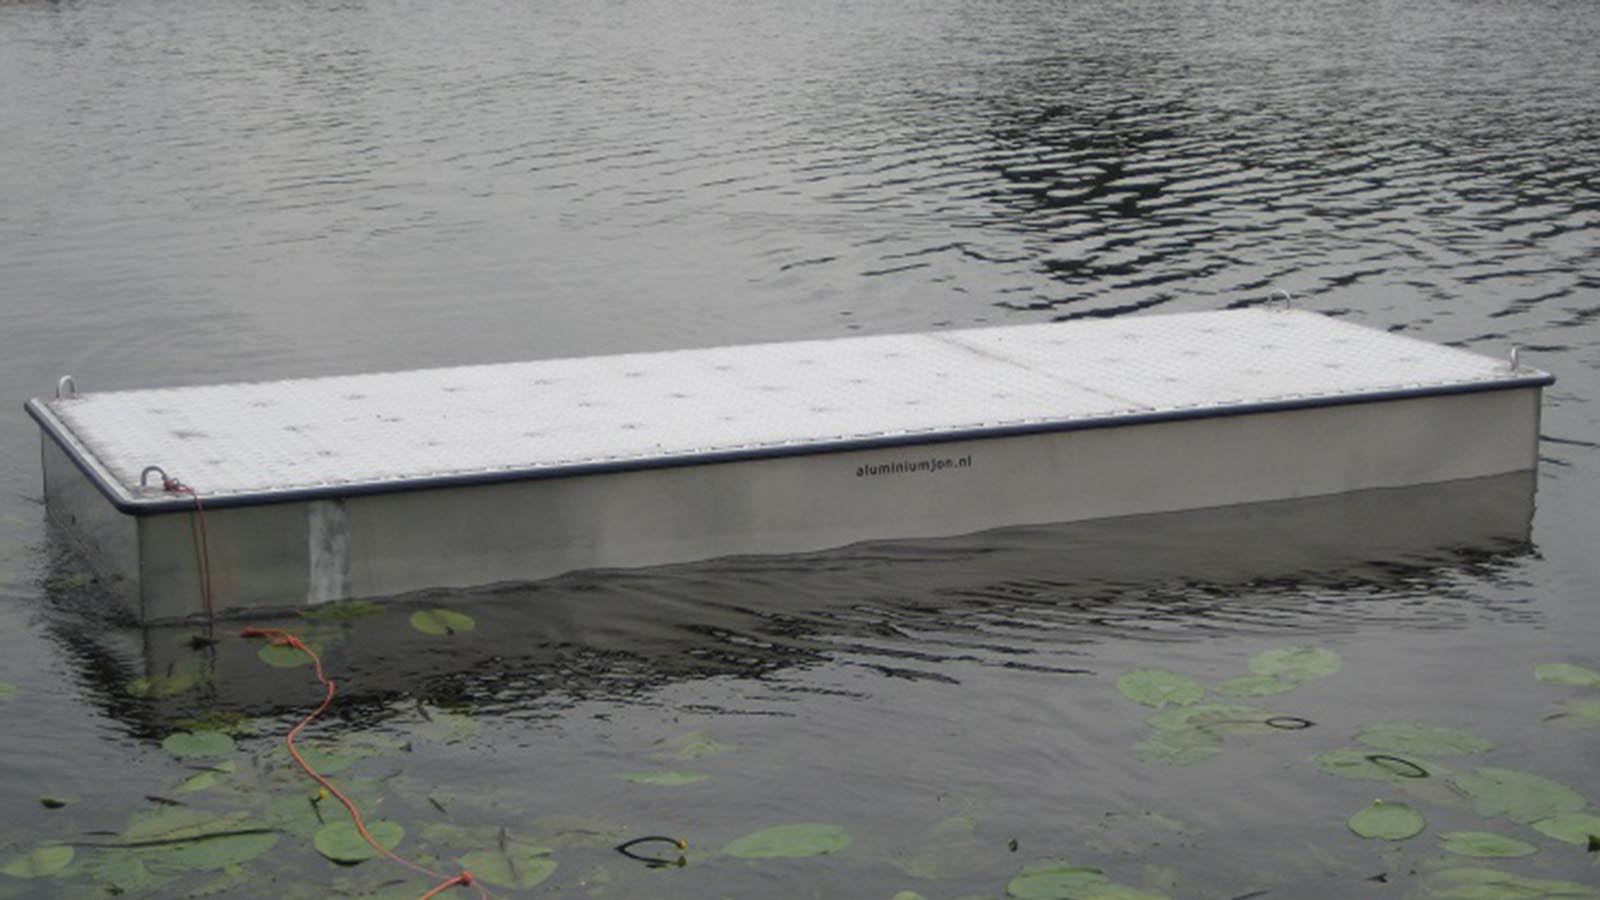 AluminiumJon.nl-Ponton 3 meter-with Yamaha outboard engine-Custom build aluminum pontoons